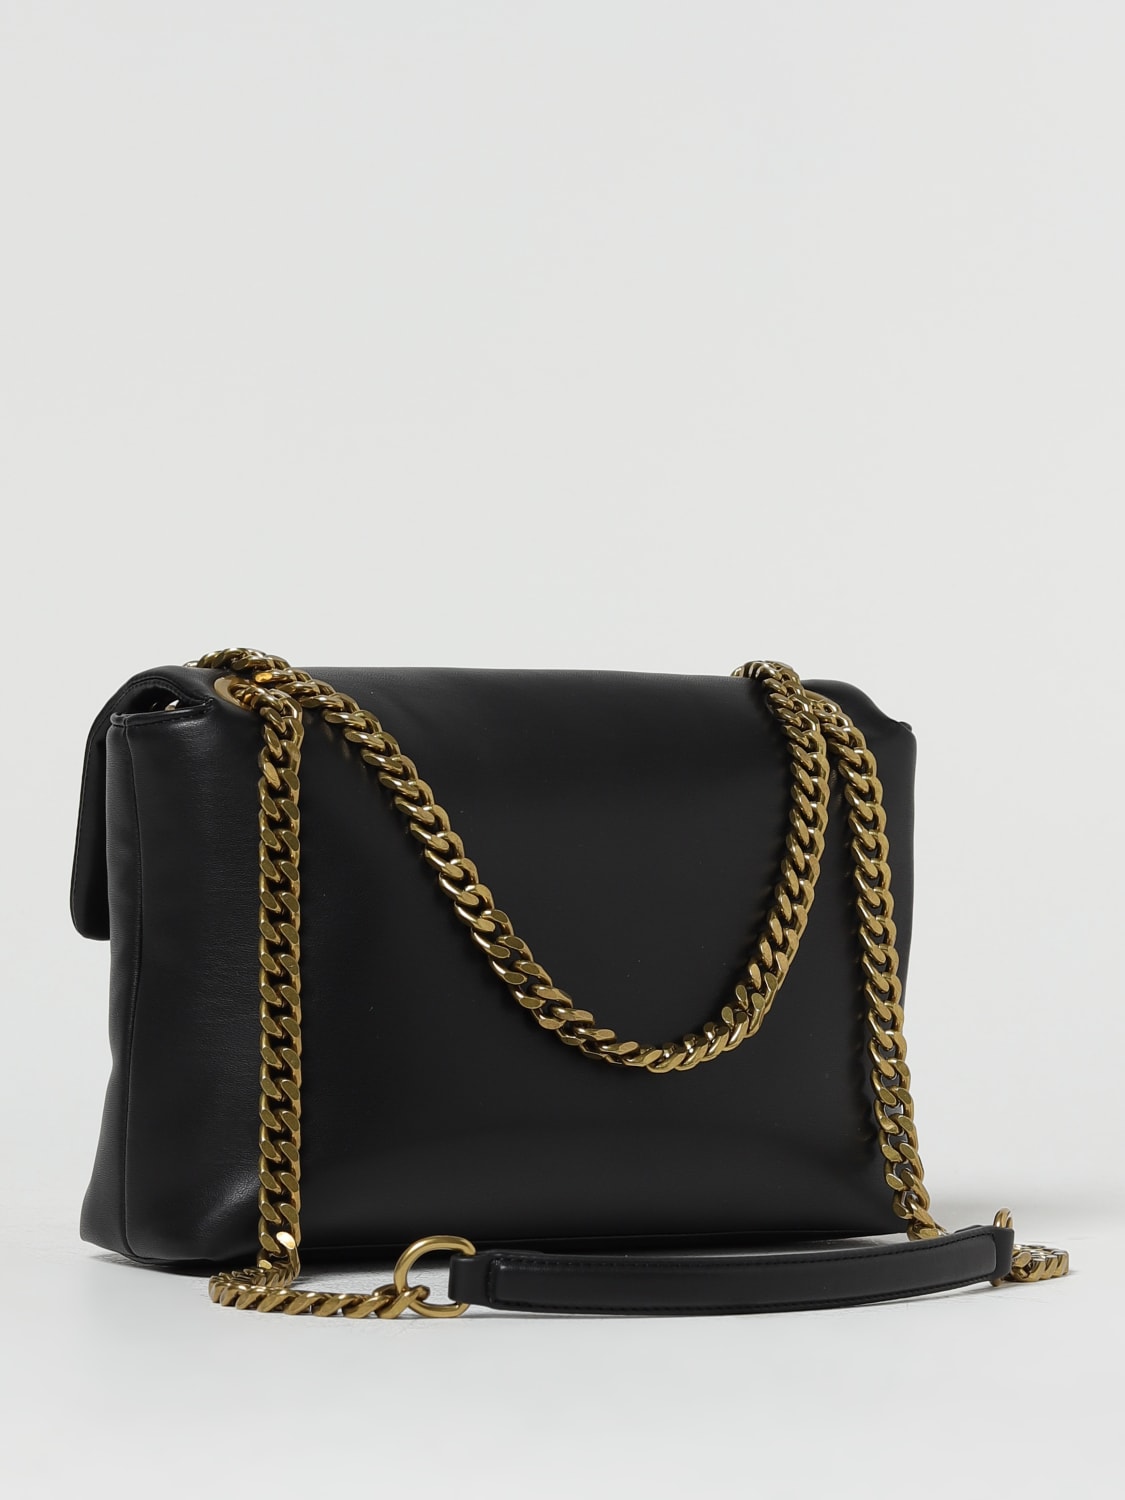 JUST CAVALLI: Handbag woman - Black